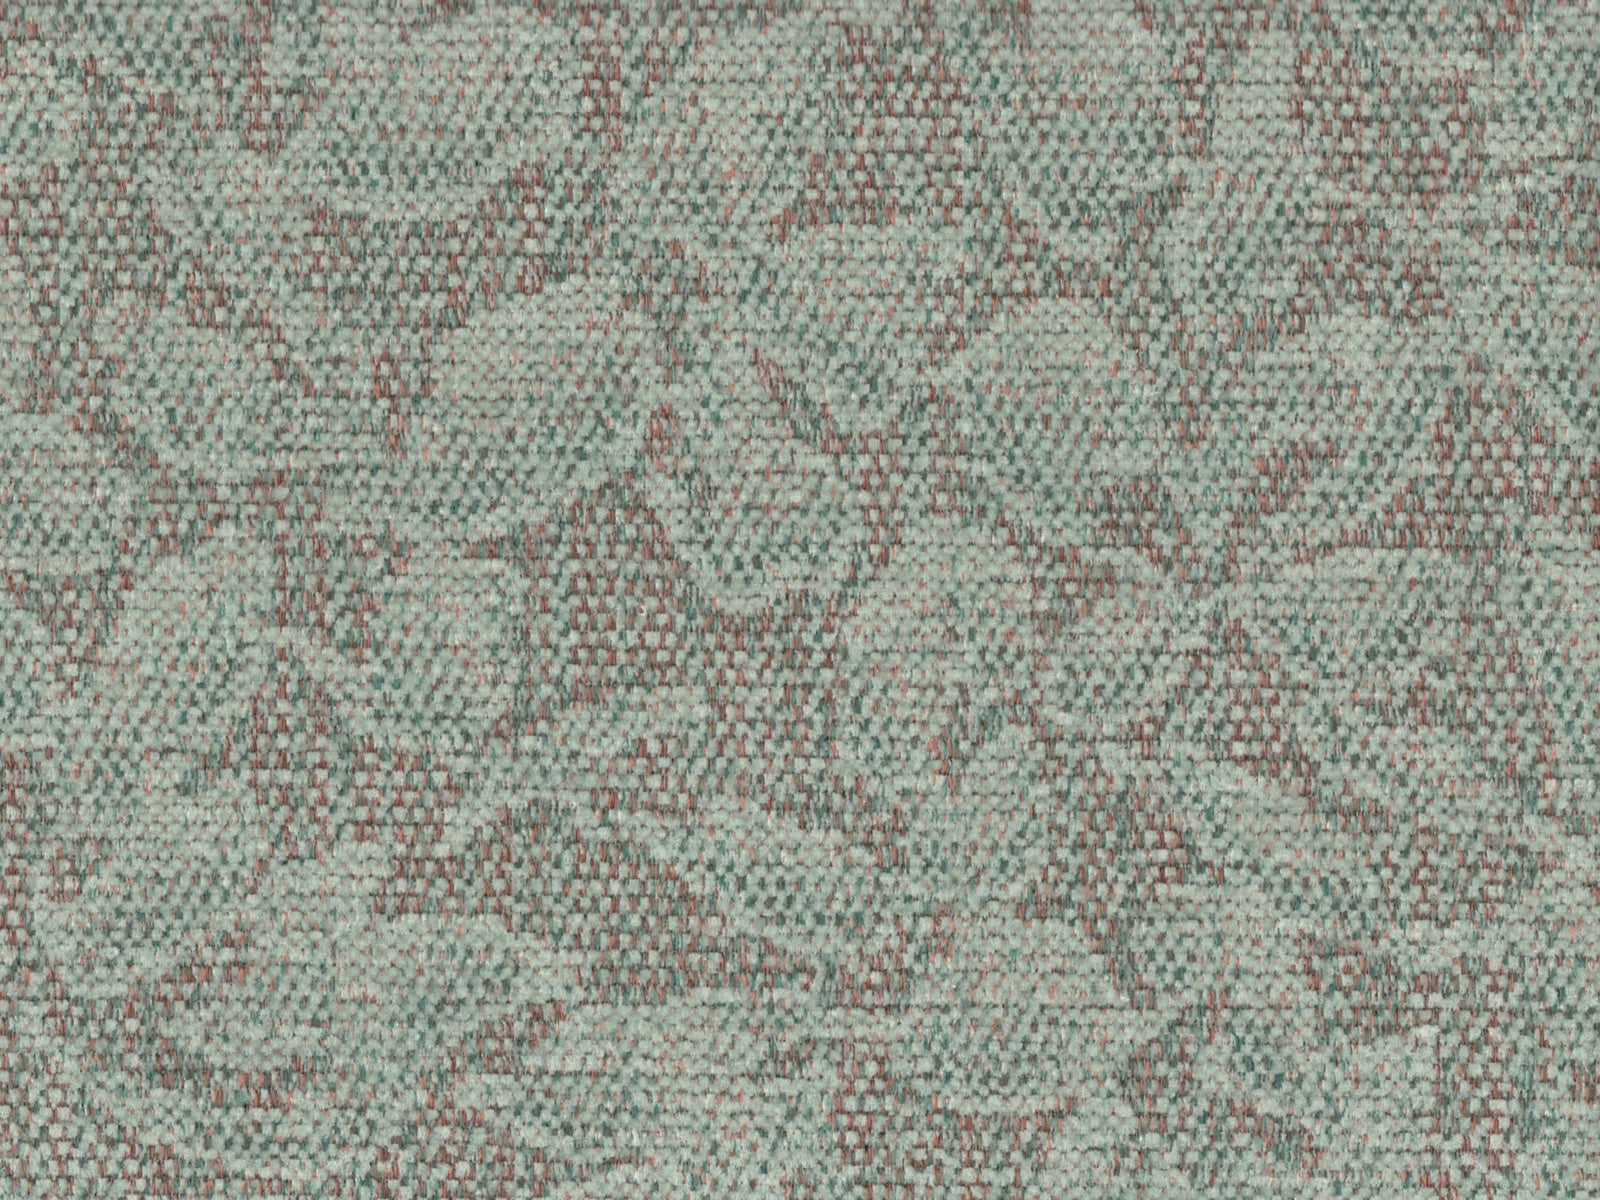 Bergamo Fabric Samples - Rydan Interiors